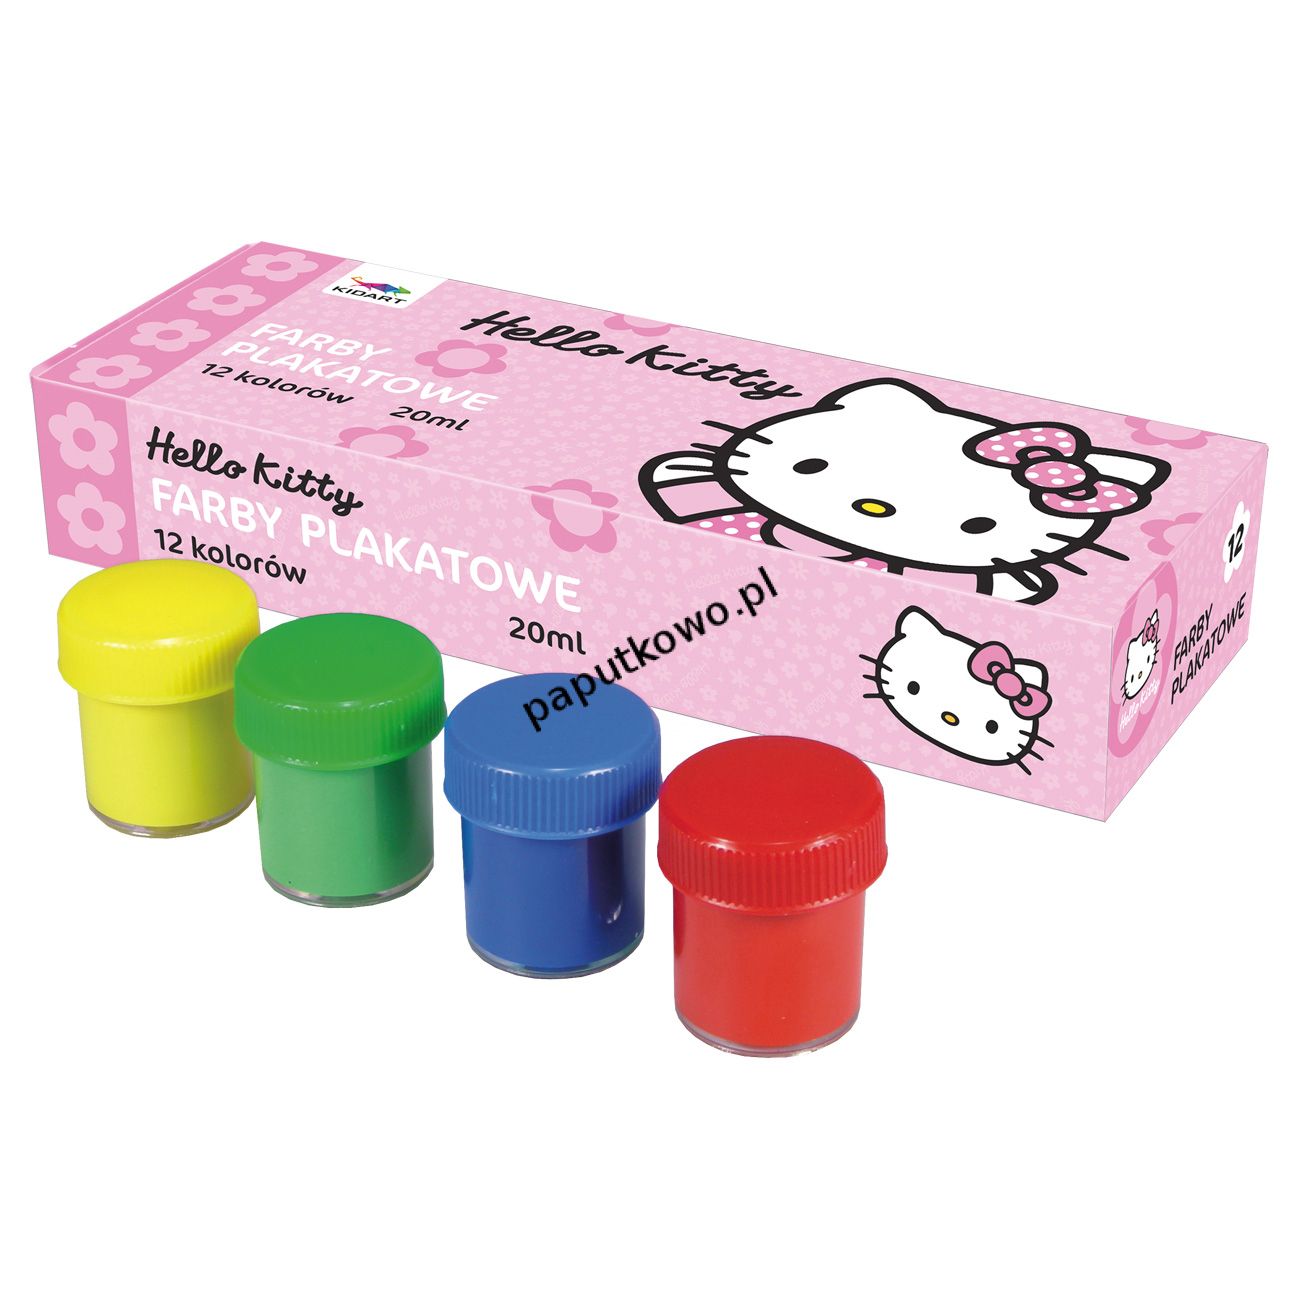 Farby plakatowe Derform Hello Kitty kolor: mix 20 ml 12 kol. (fp12kHK)